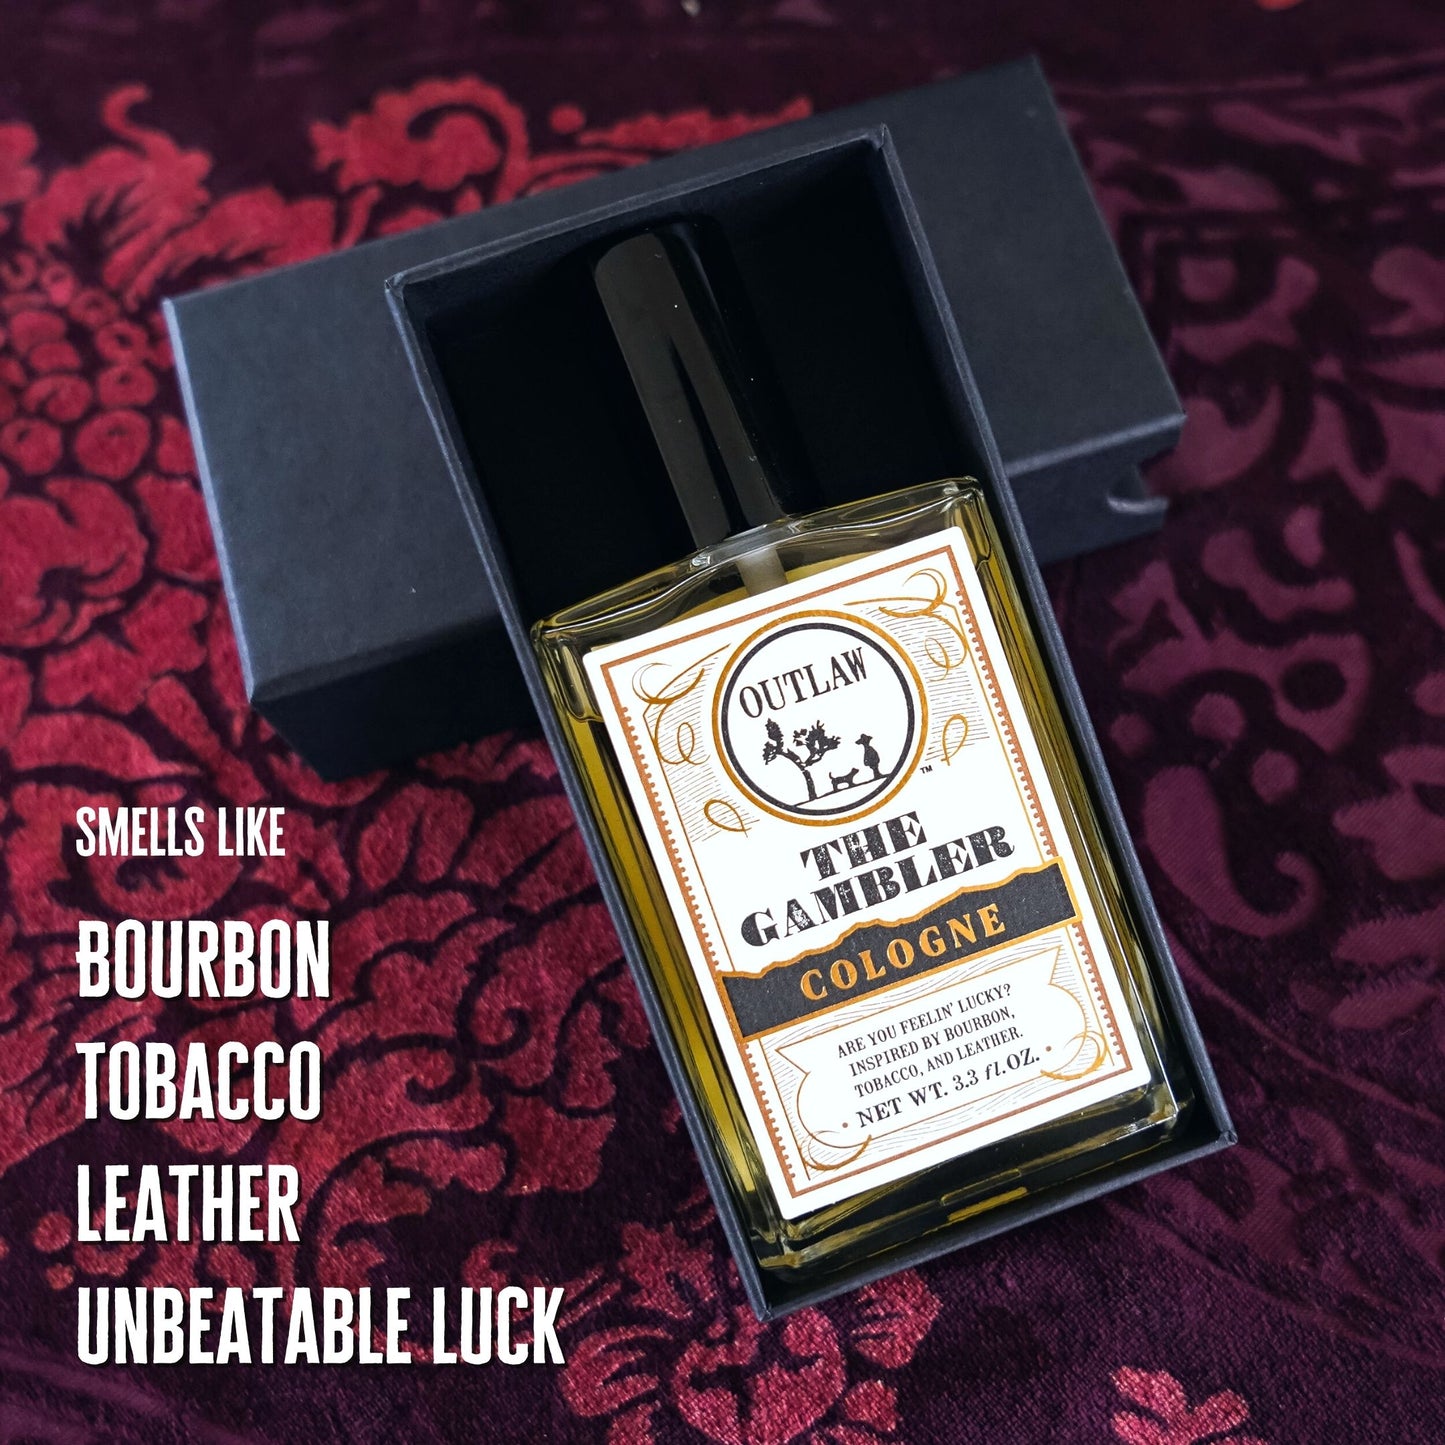 The Gambler Bourbon Cologne